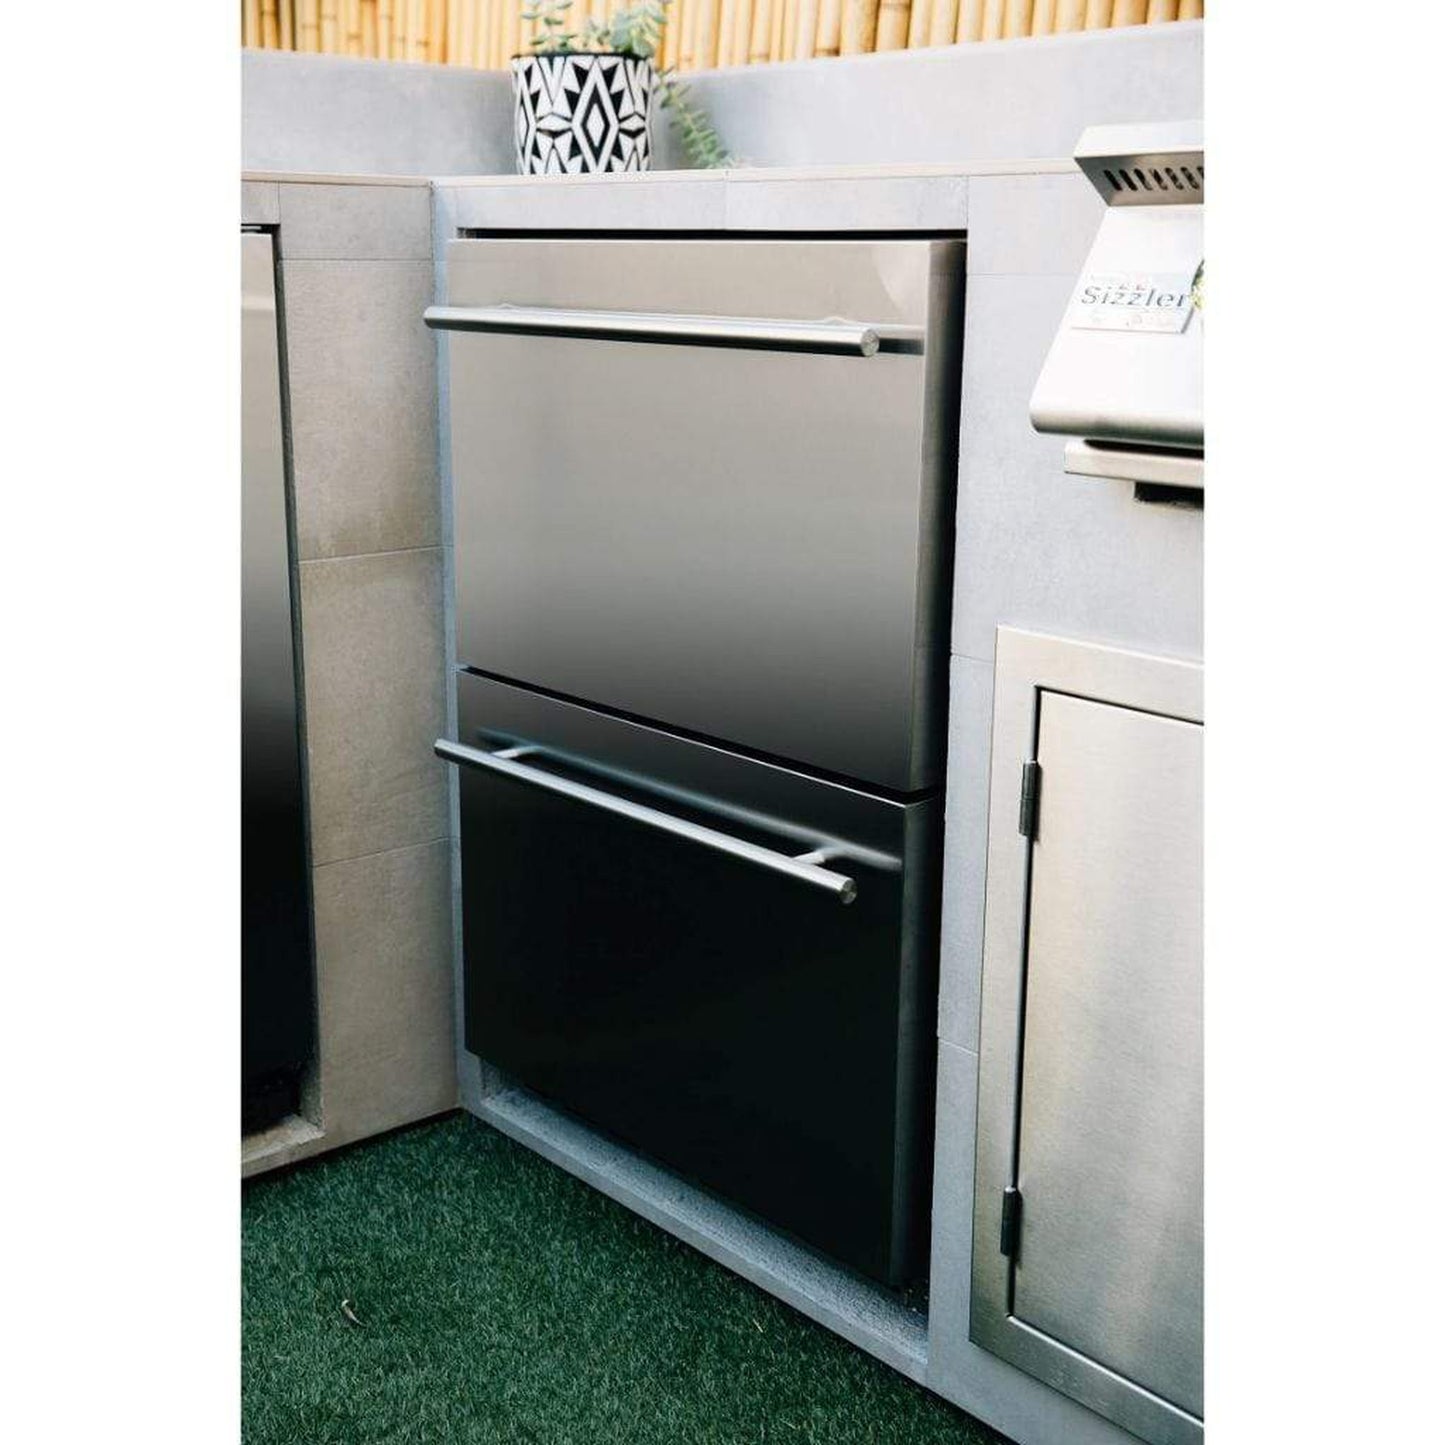 Summerset 24" 5.3 Cu. Ft. Outdoor Rated 2-Drawer Deluxe Refrigerator